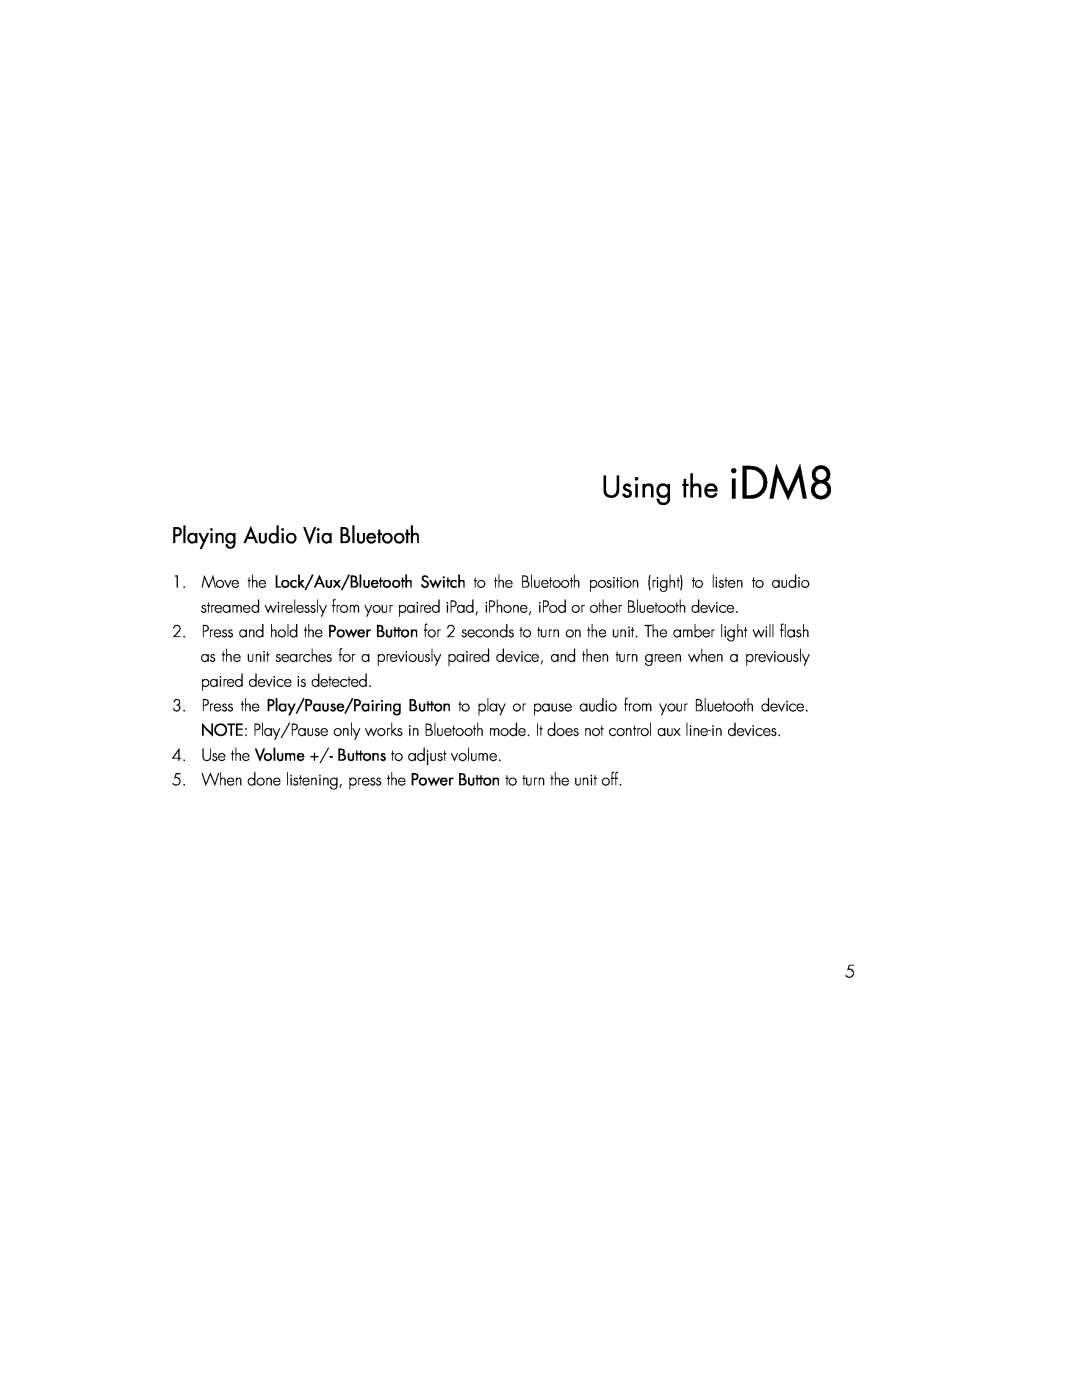 iHome instruction manual Playing Audio Via Bluetooth, Using the iDM8 